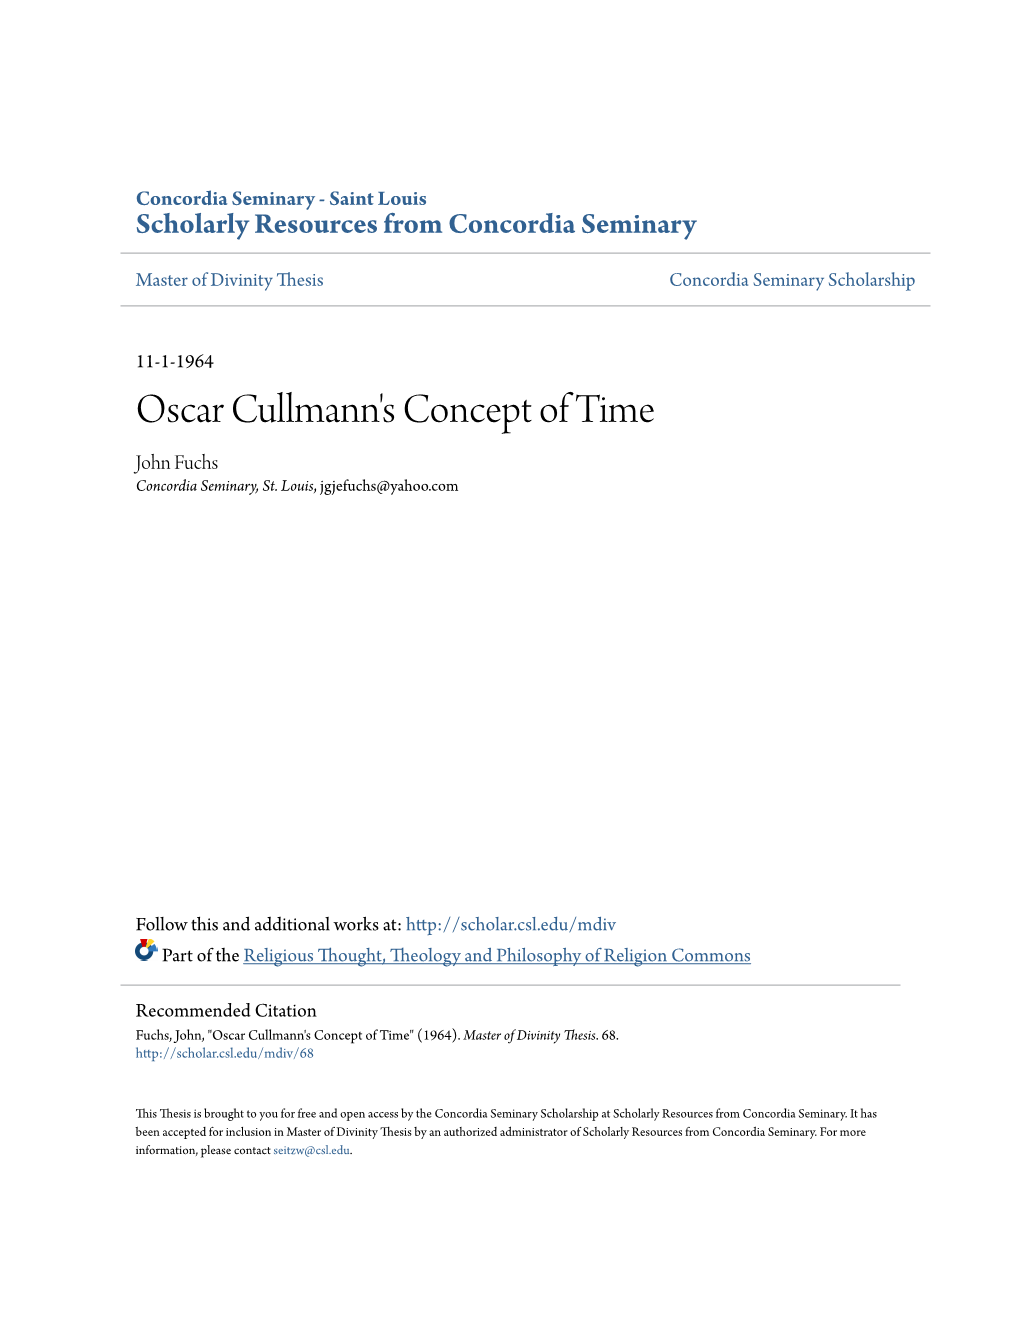 Oscar Cullmann's Concept of Time John Fuchs Concordia Seminary, St